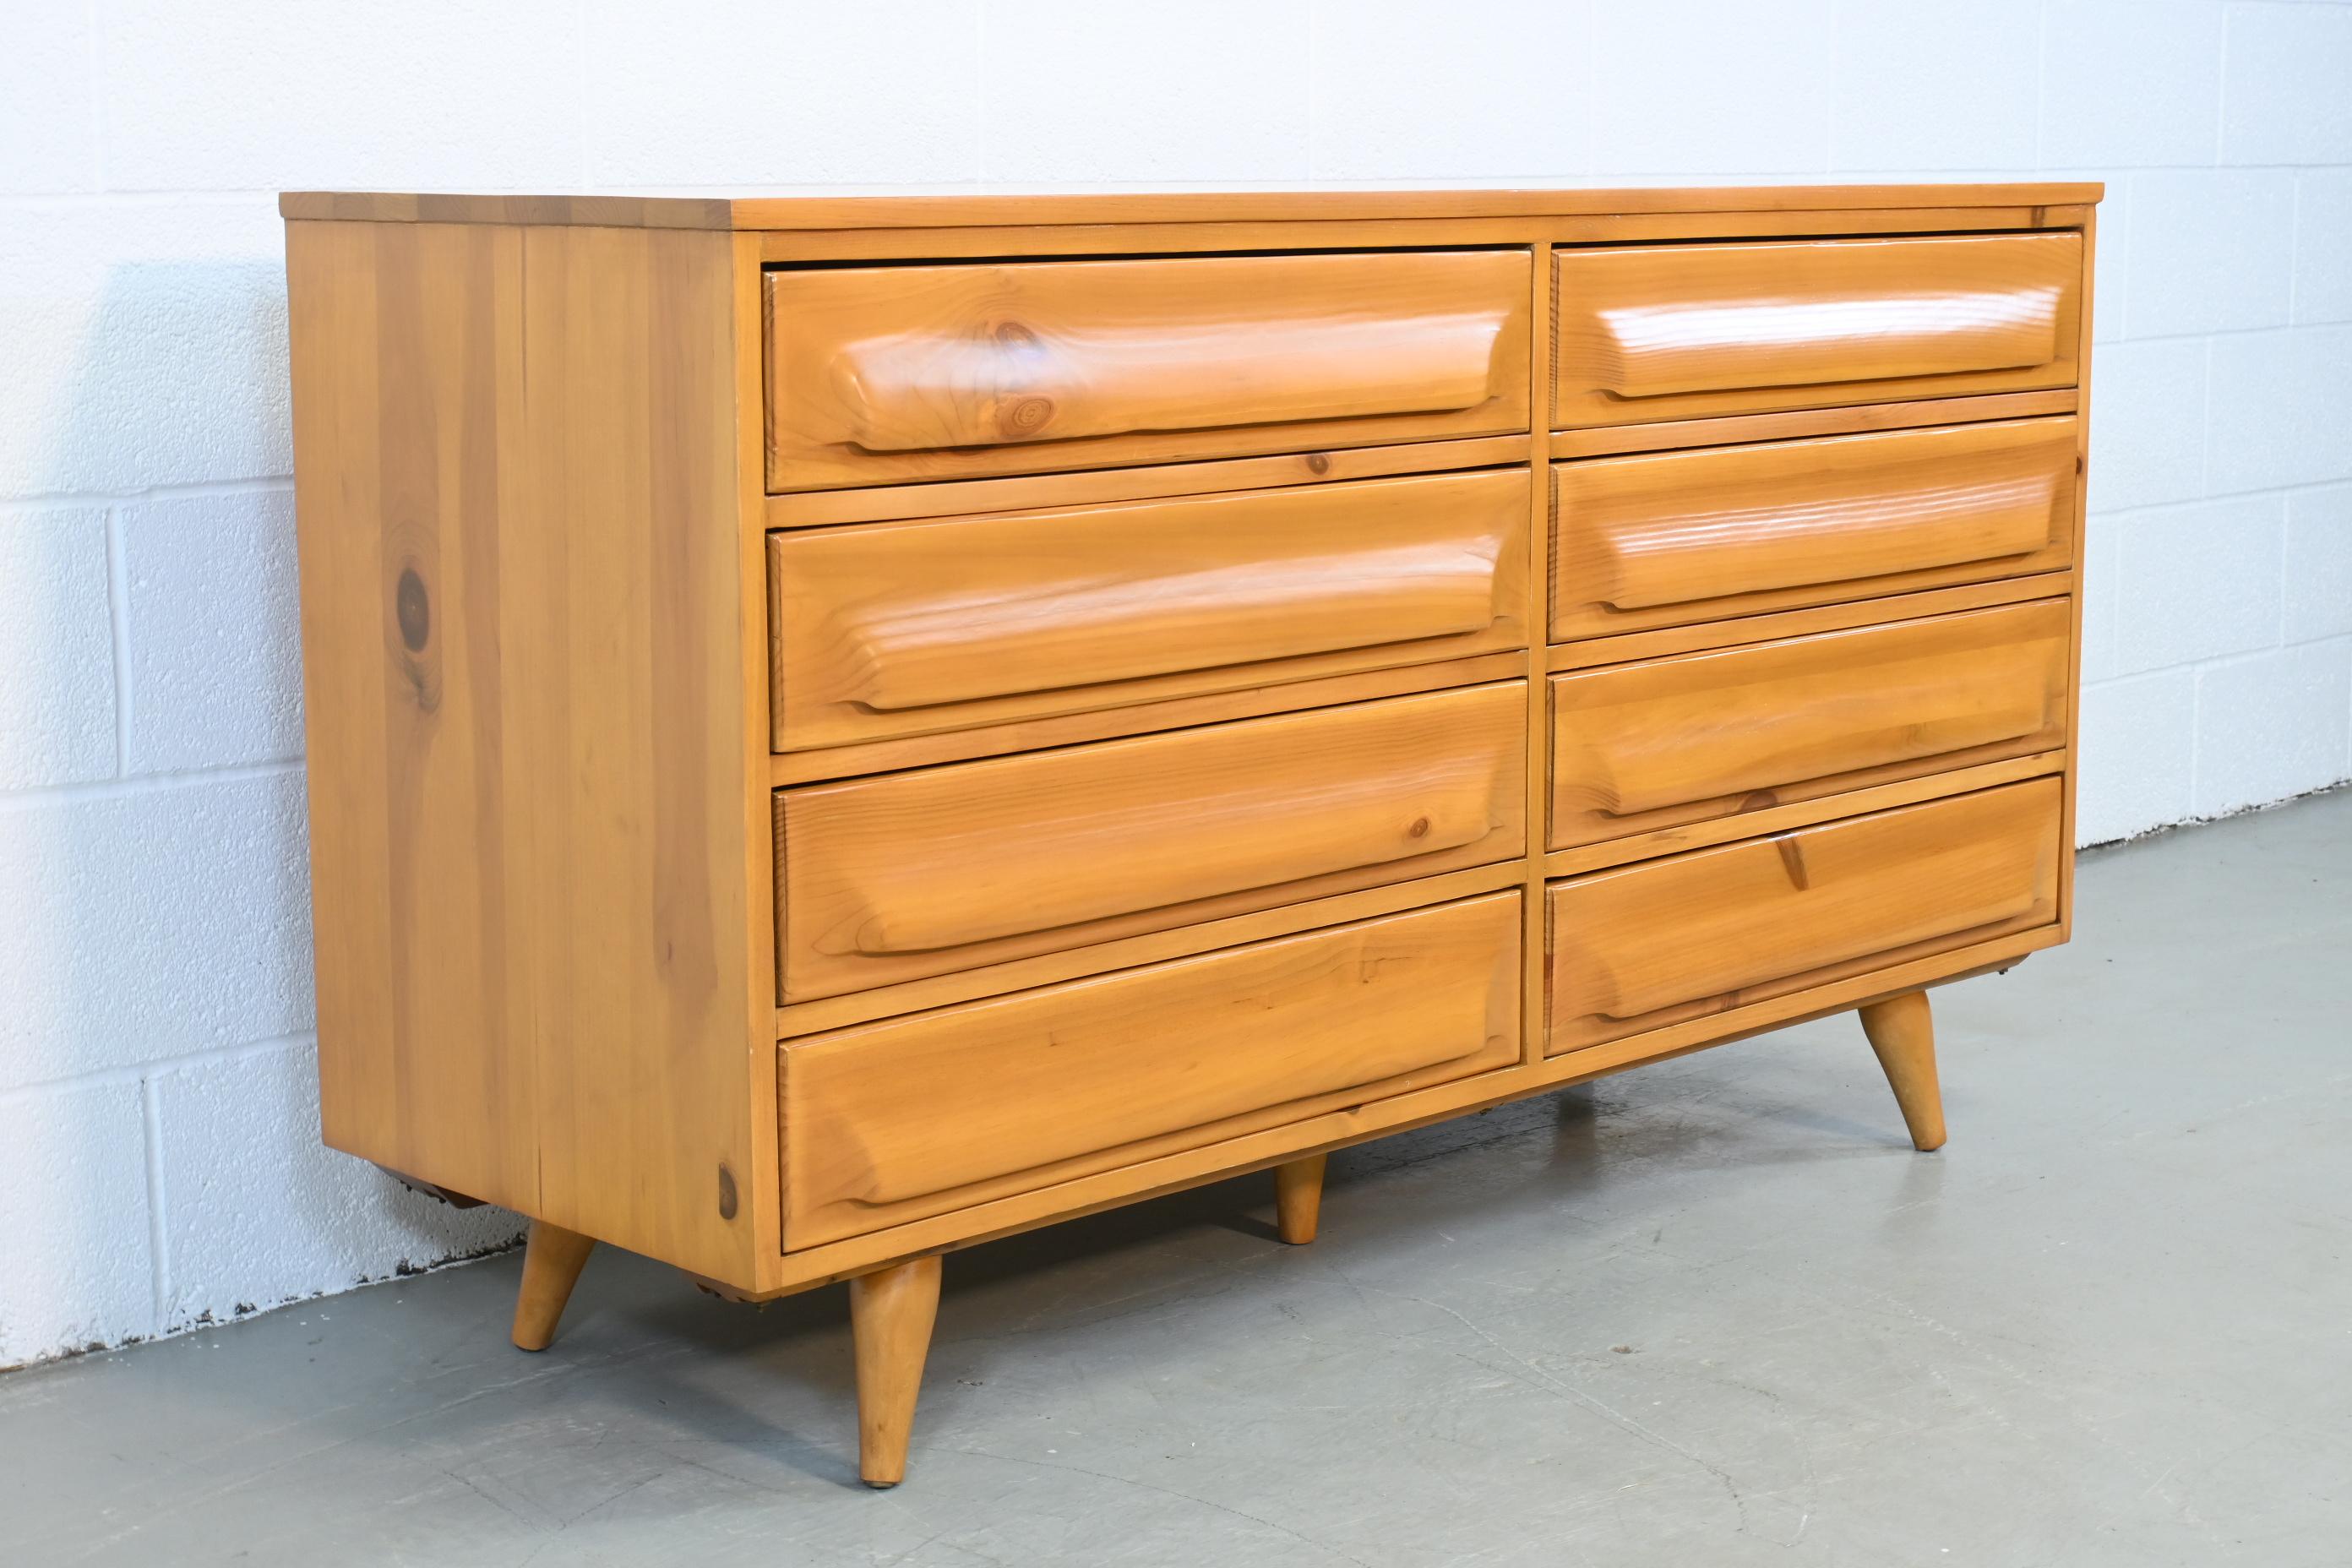 Franklin Shockey Mid-Century Modern Eight-Drawer Pine Dresser

Franklin Shockey Co., USA, 1950s

Measures: 56.63